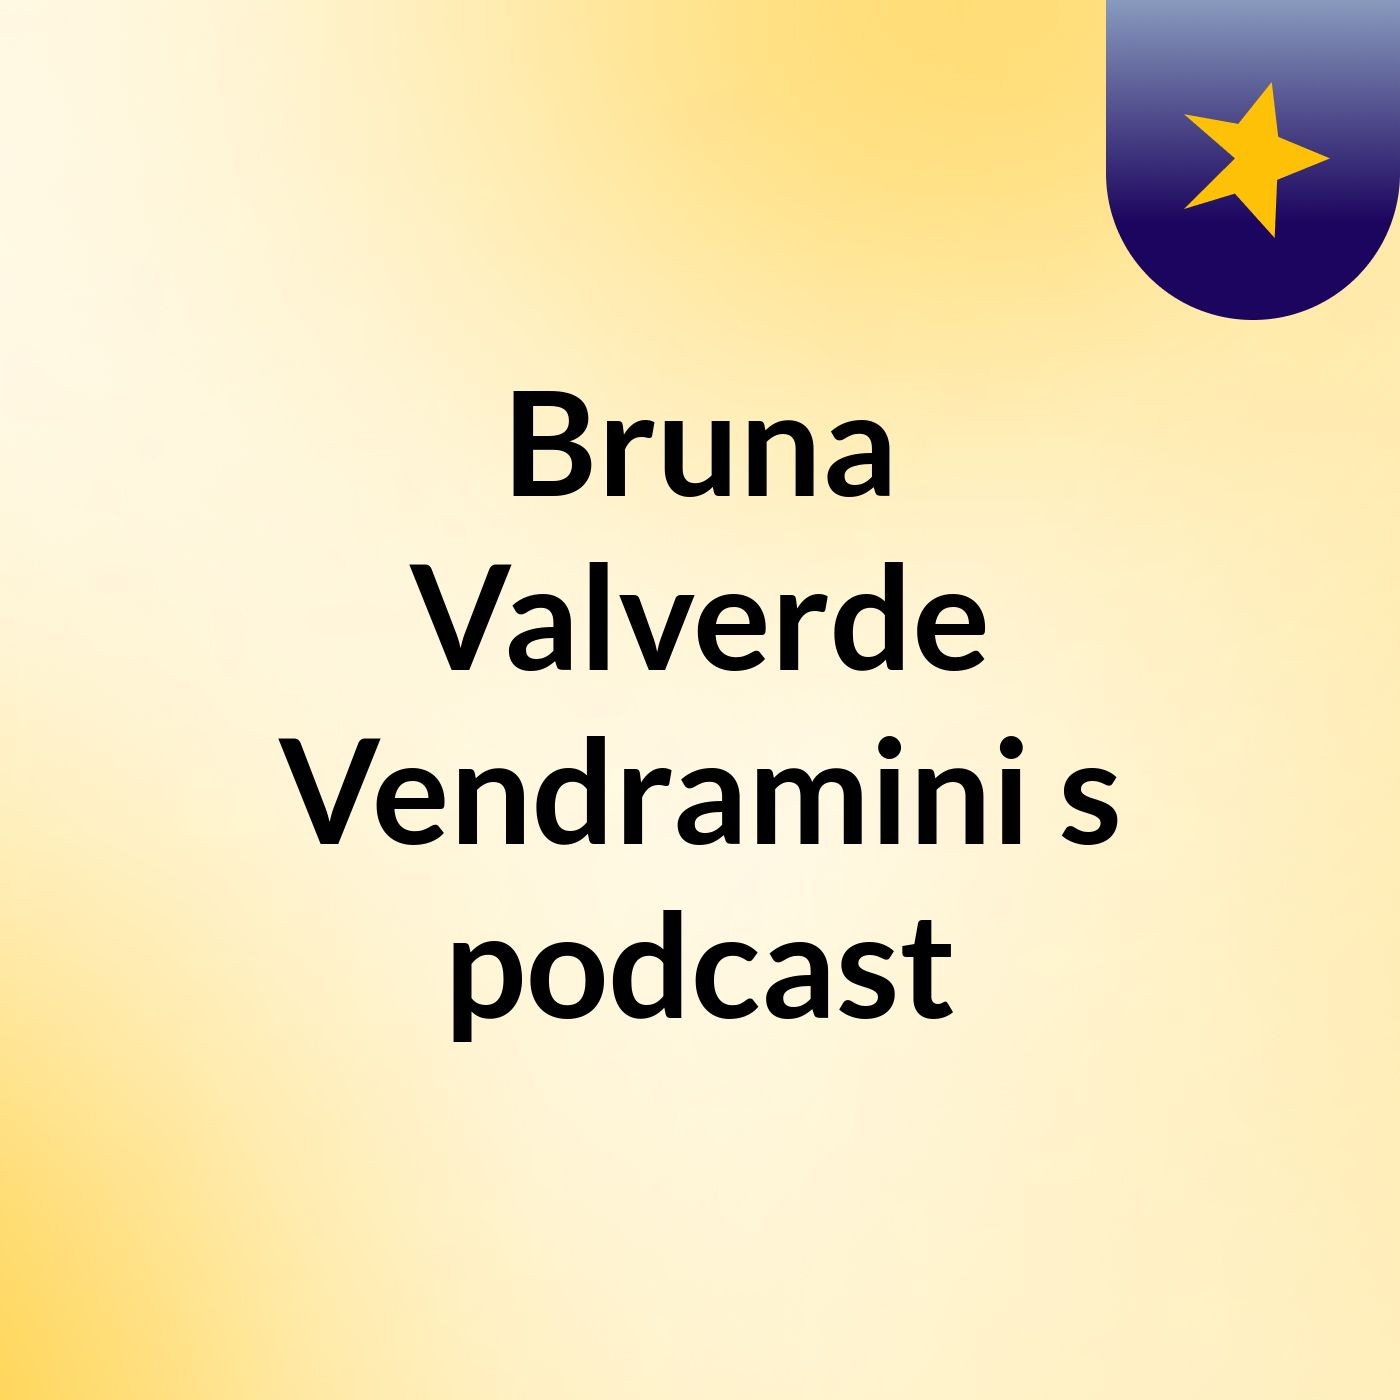 Bruna Valverde Vendramini's podcast